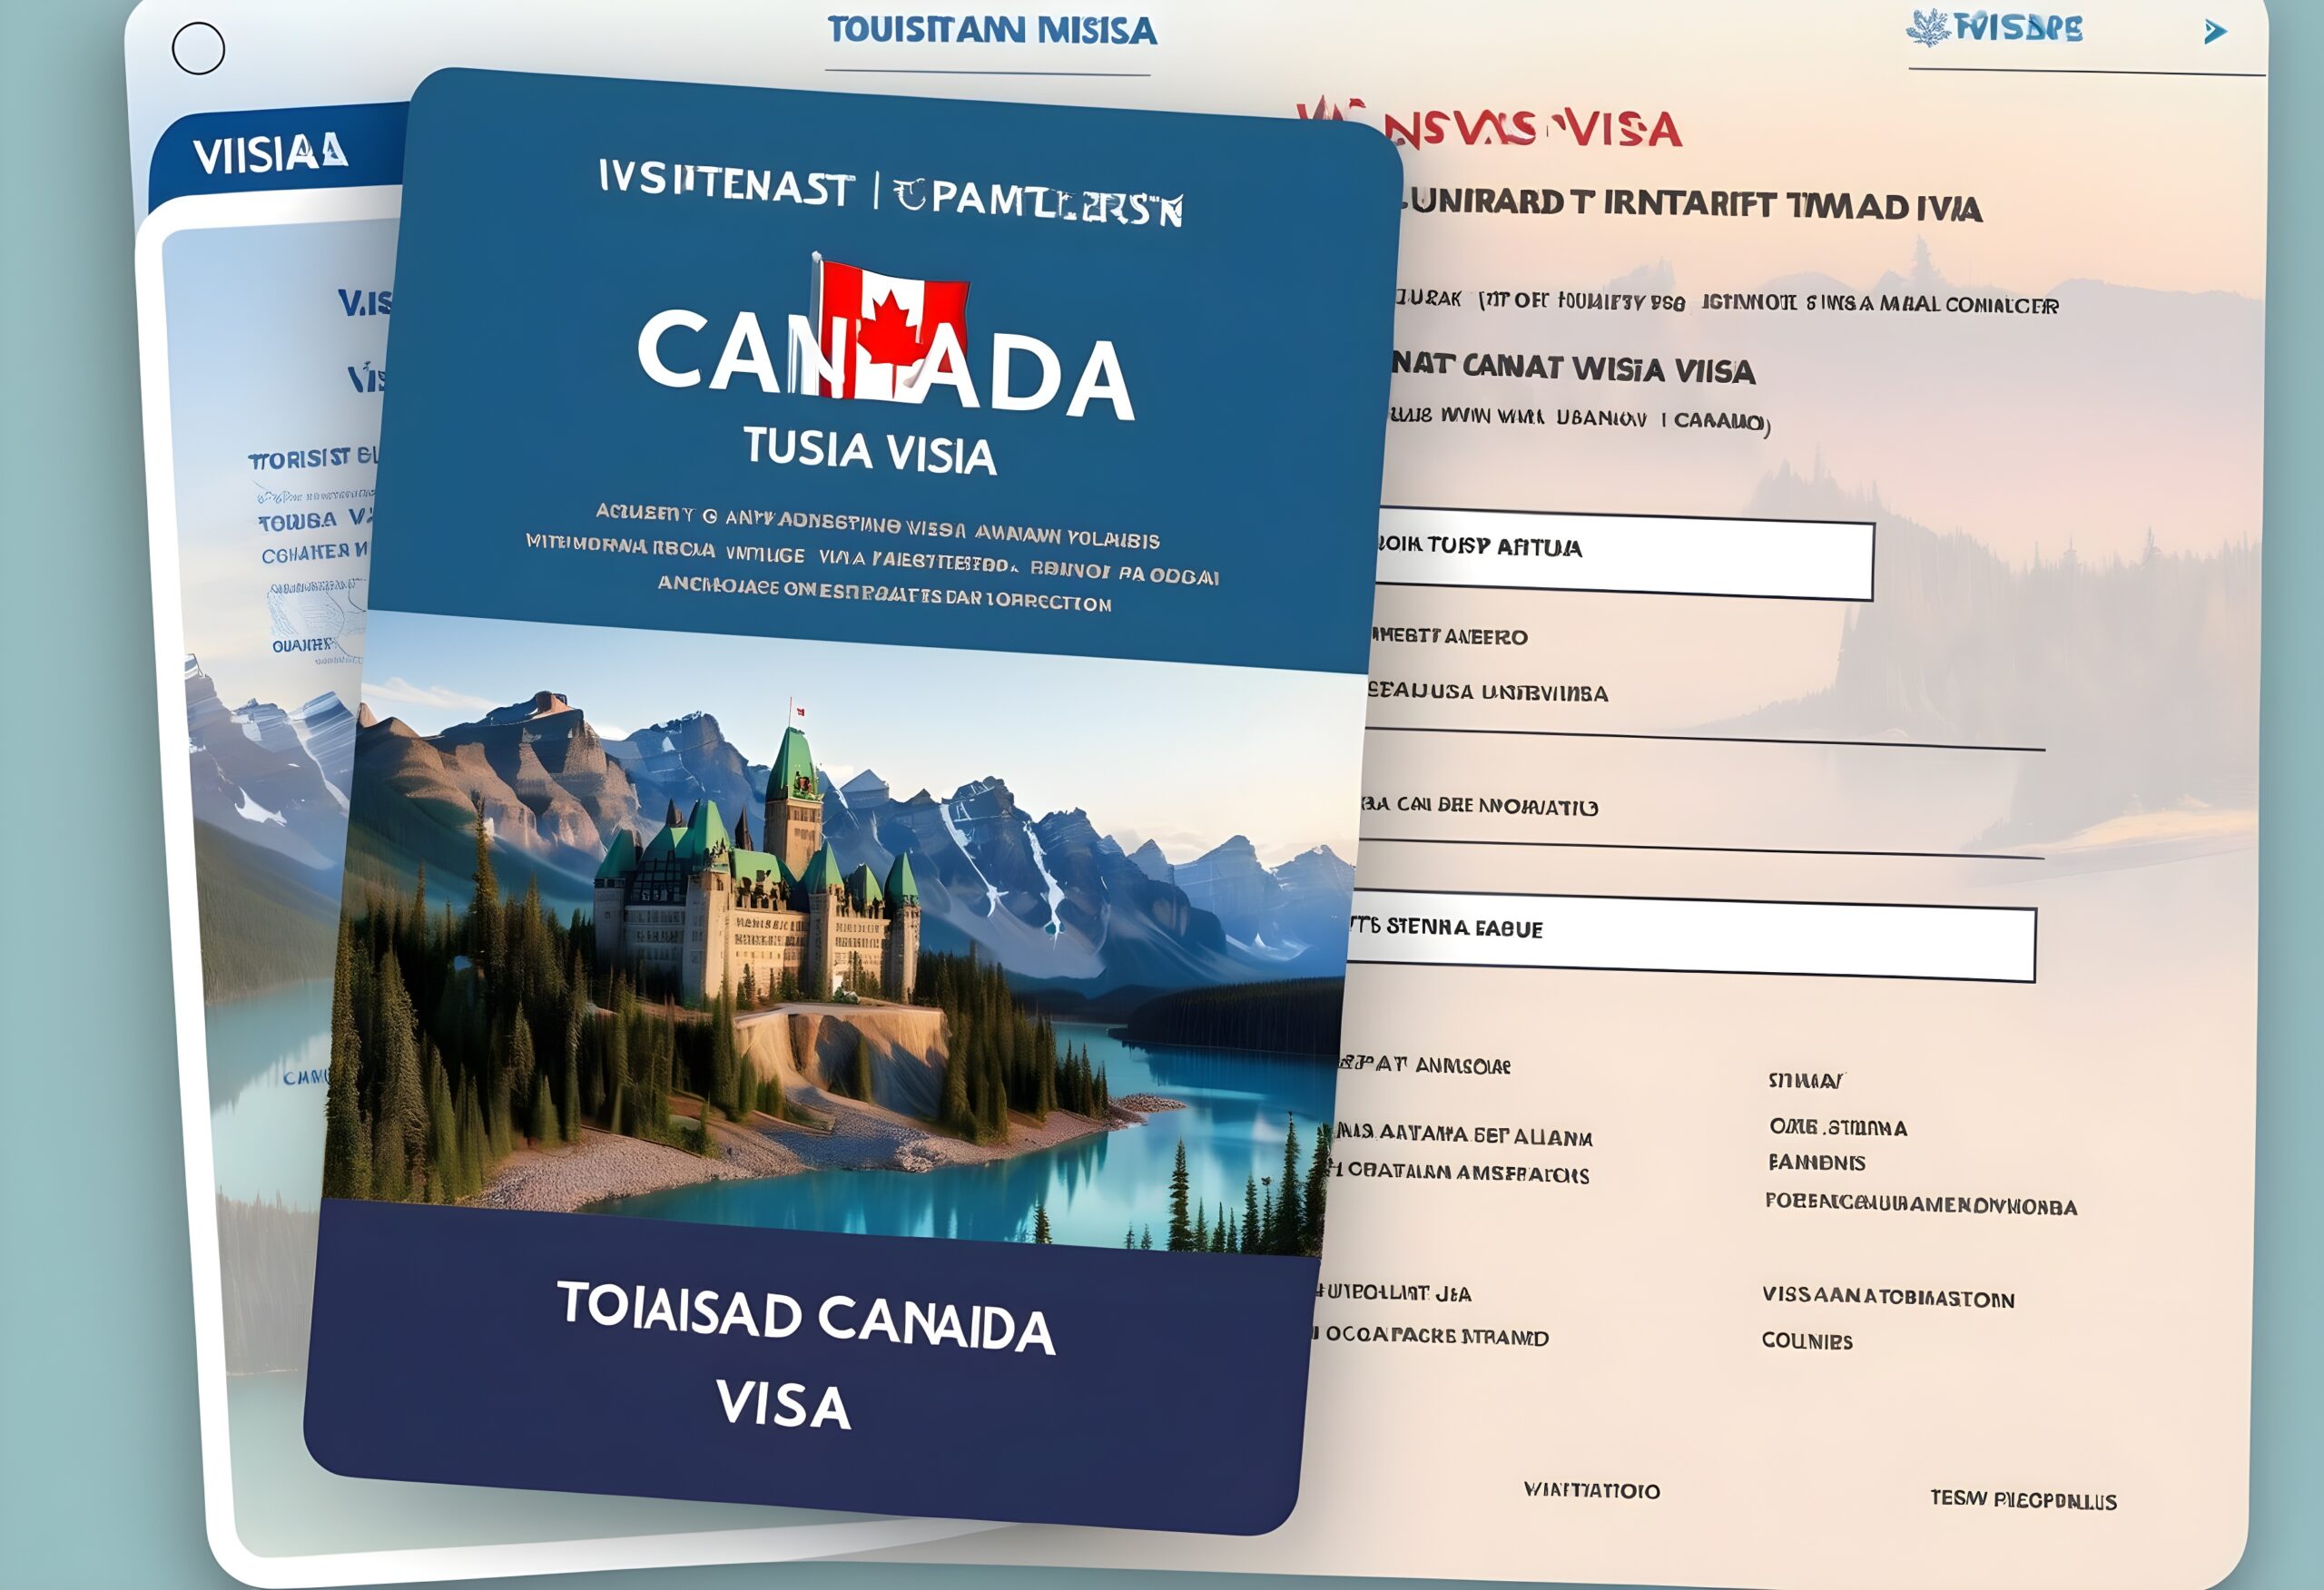 pikaso_texttoimage_Canada-tourist-visa-page